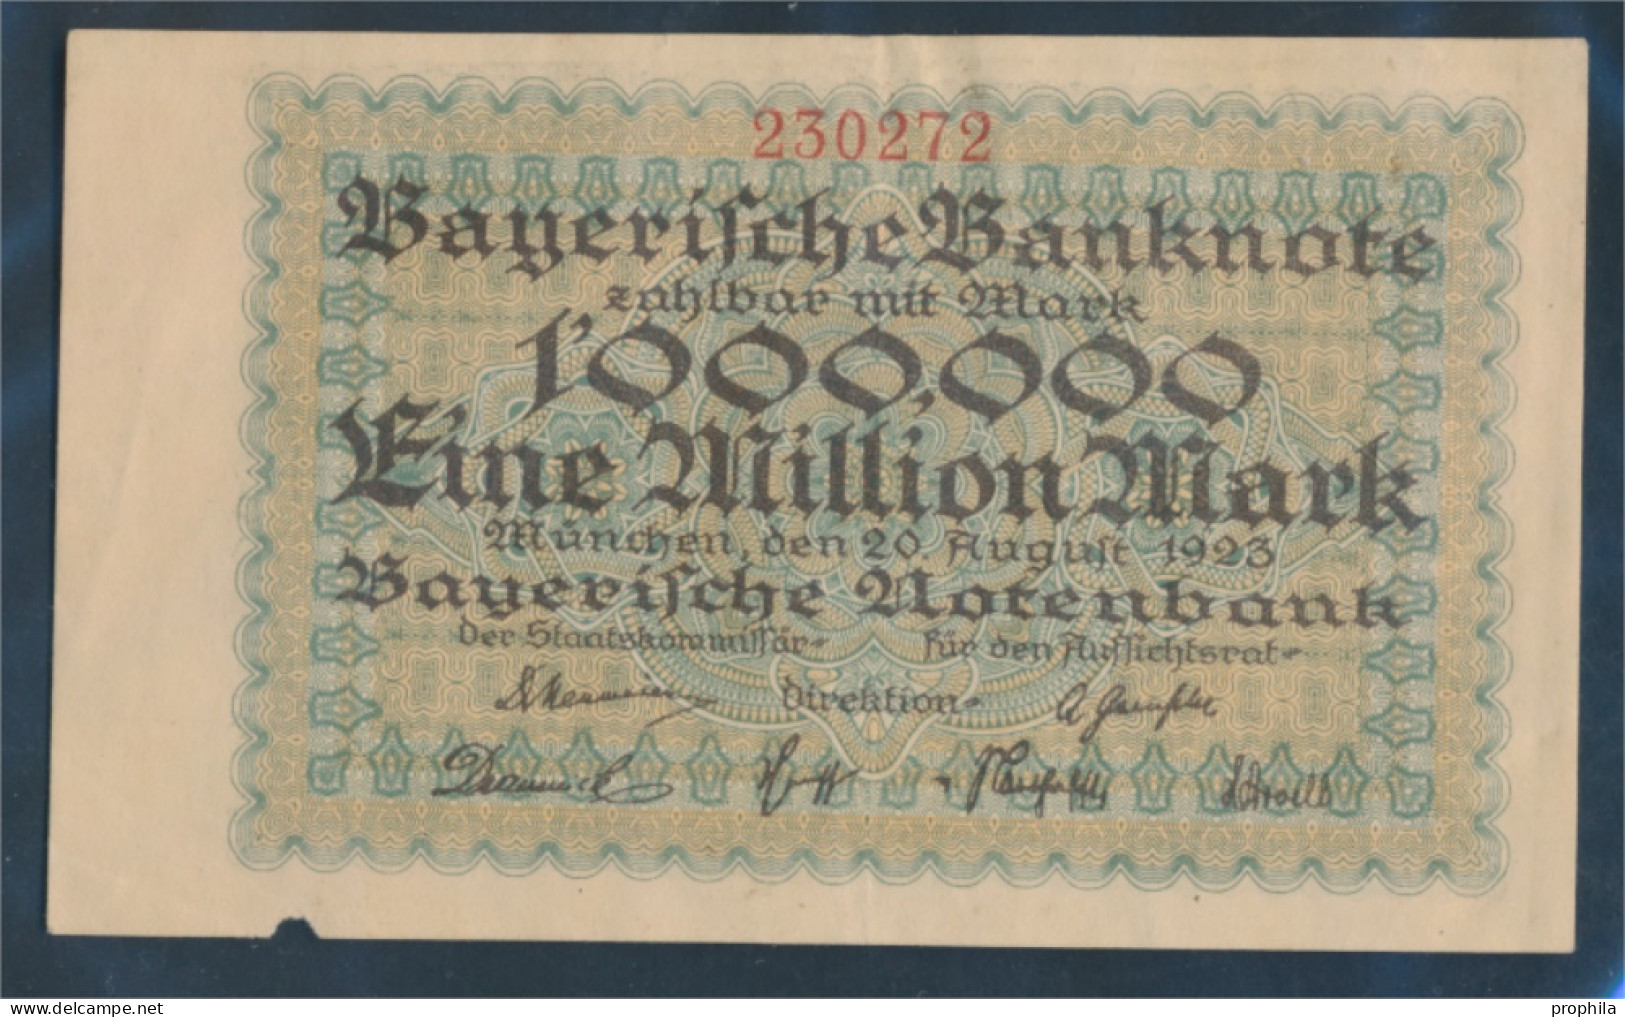 Bayern Rosenbg: BAY12 Länderbanknote Bayern Gebraucht (III) 1923 1 Million Mark (10288408 - 1 Million Mark